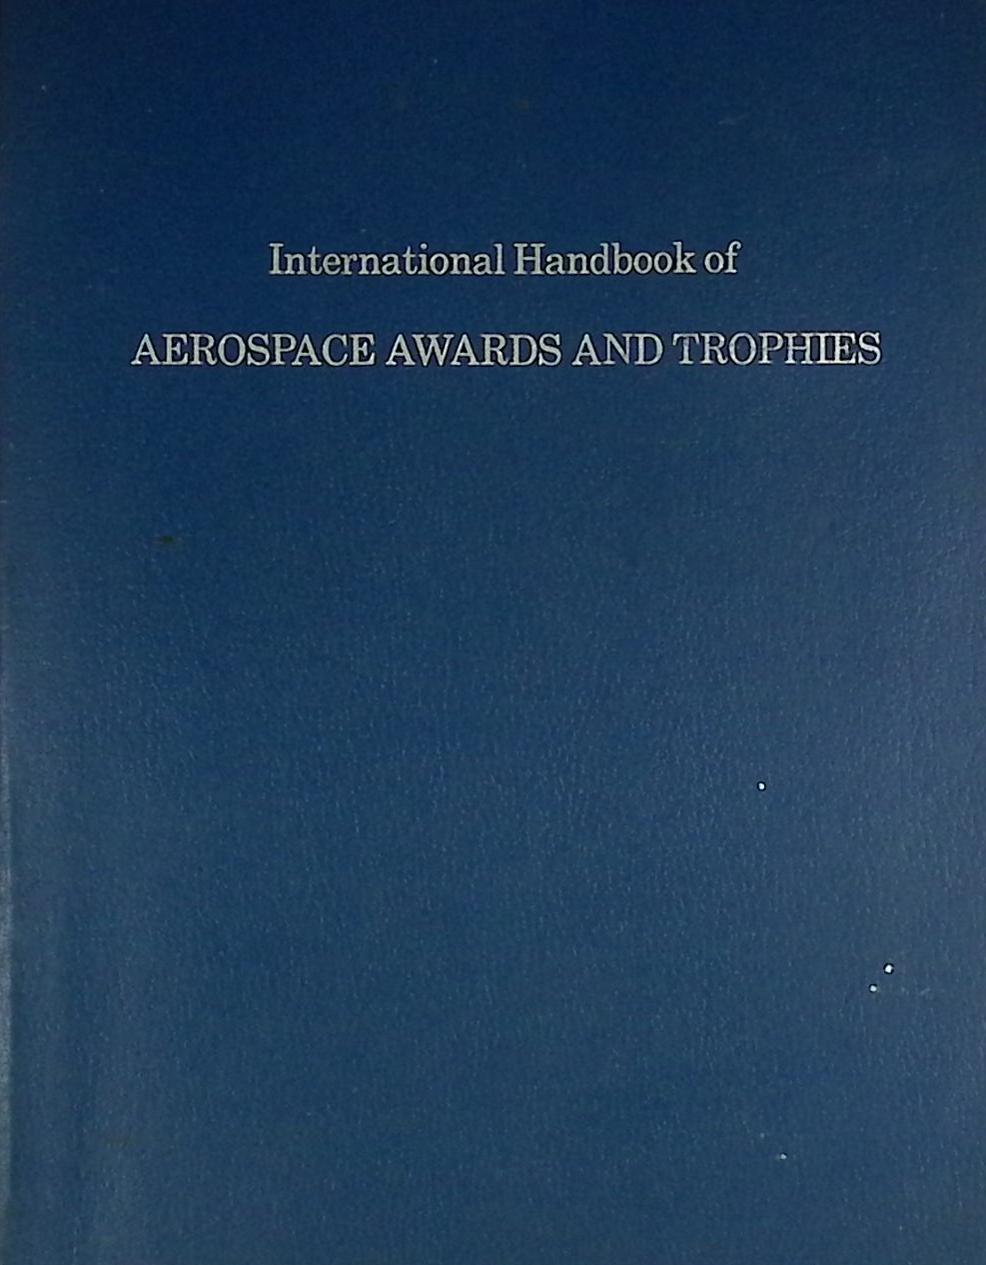 International Handbook of Aerospace Awards and Trophies